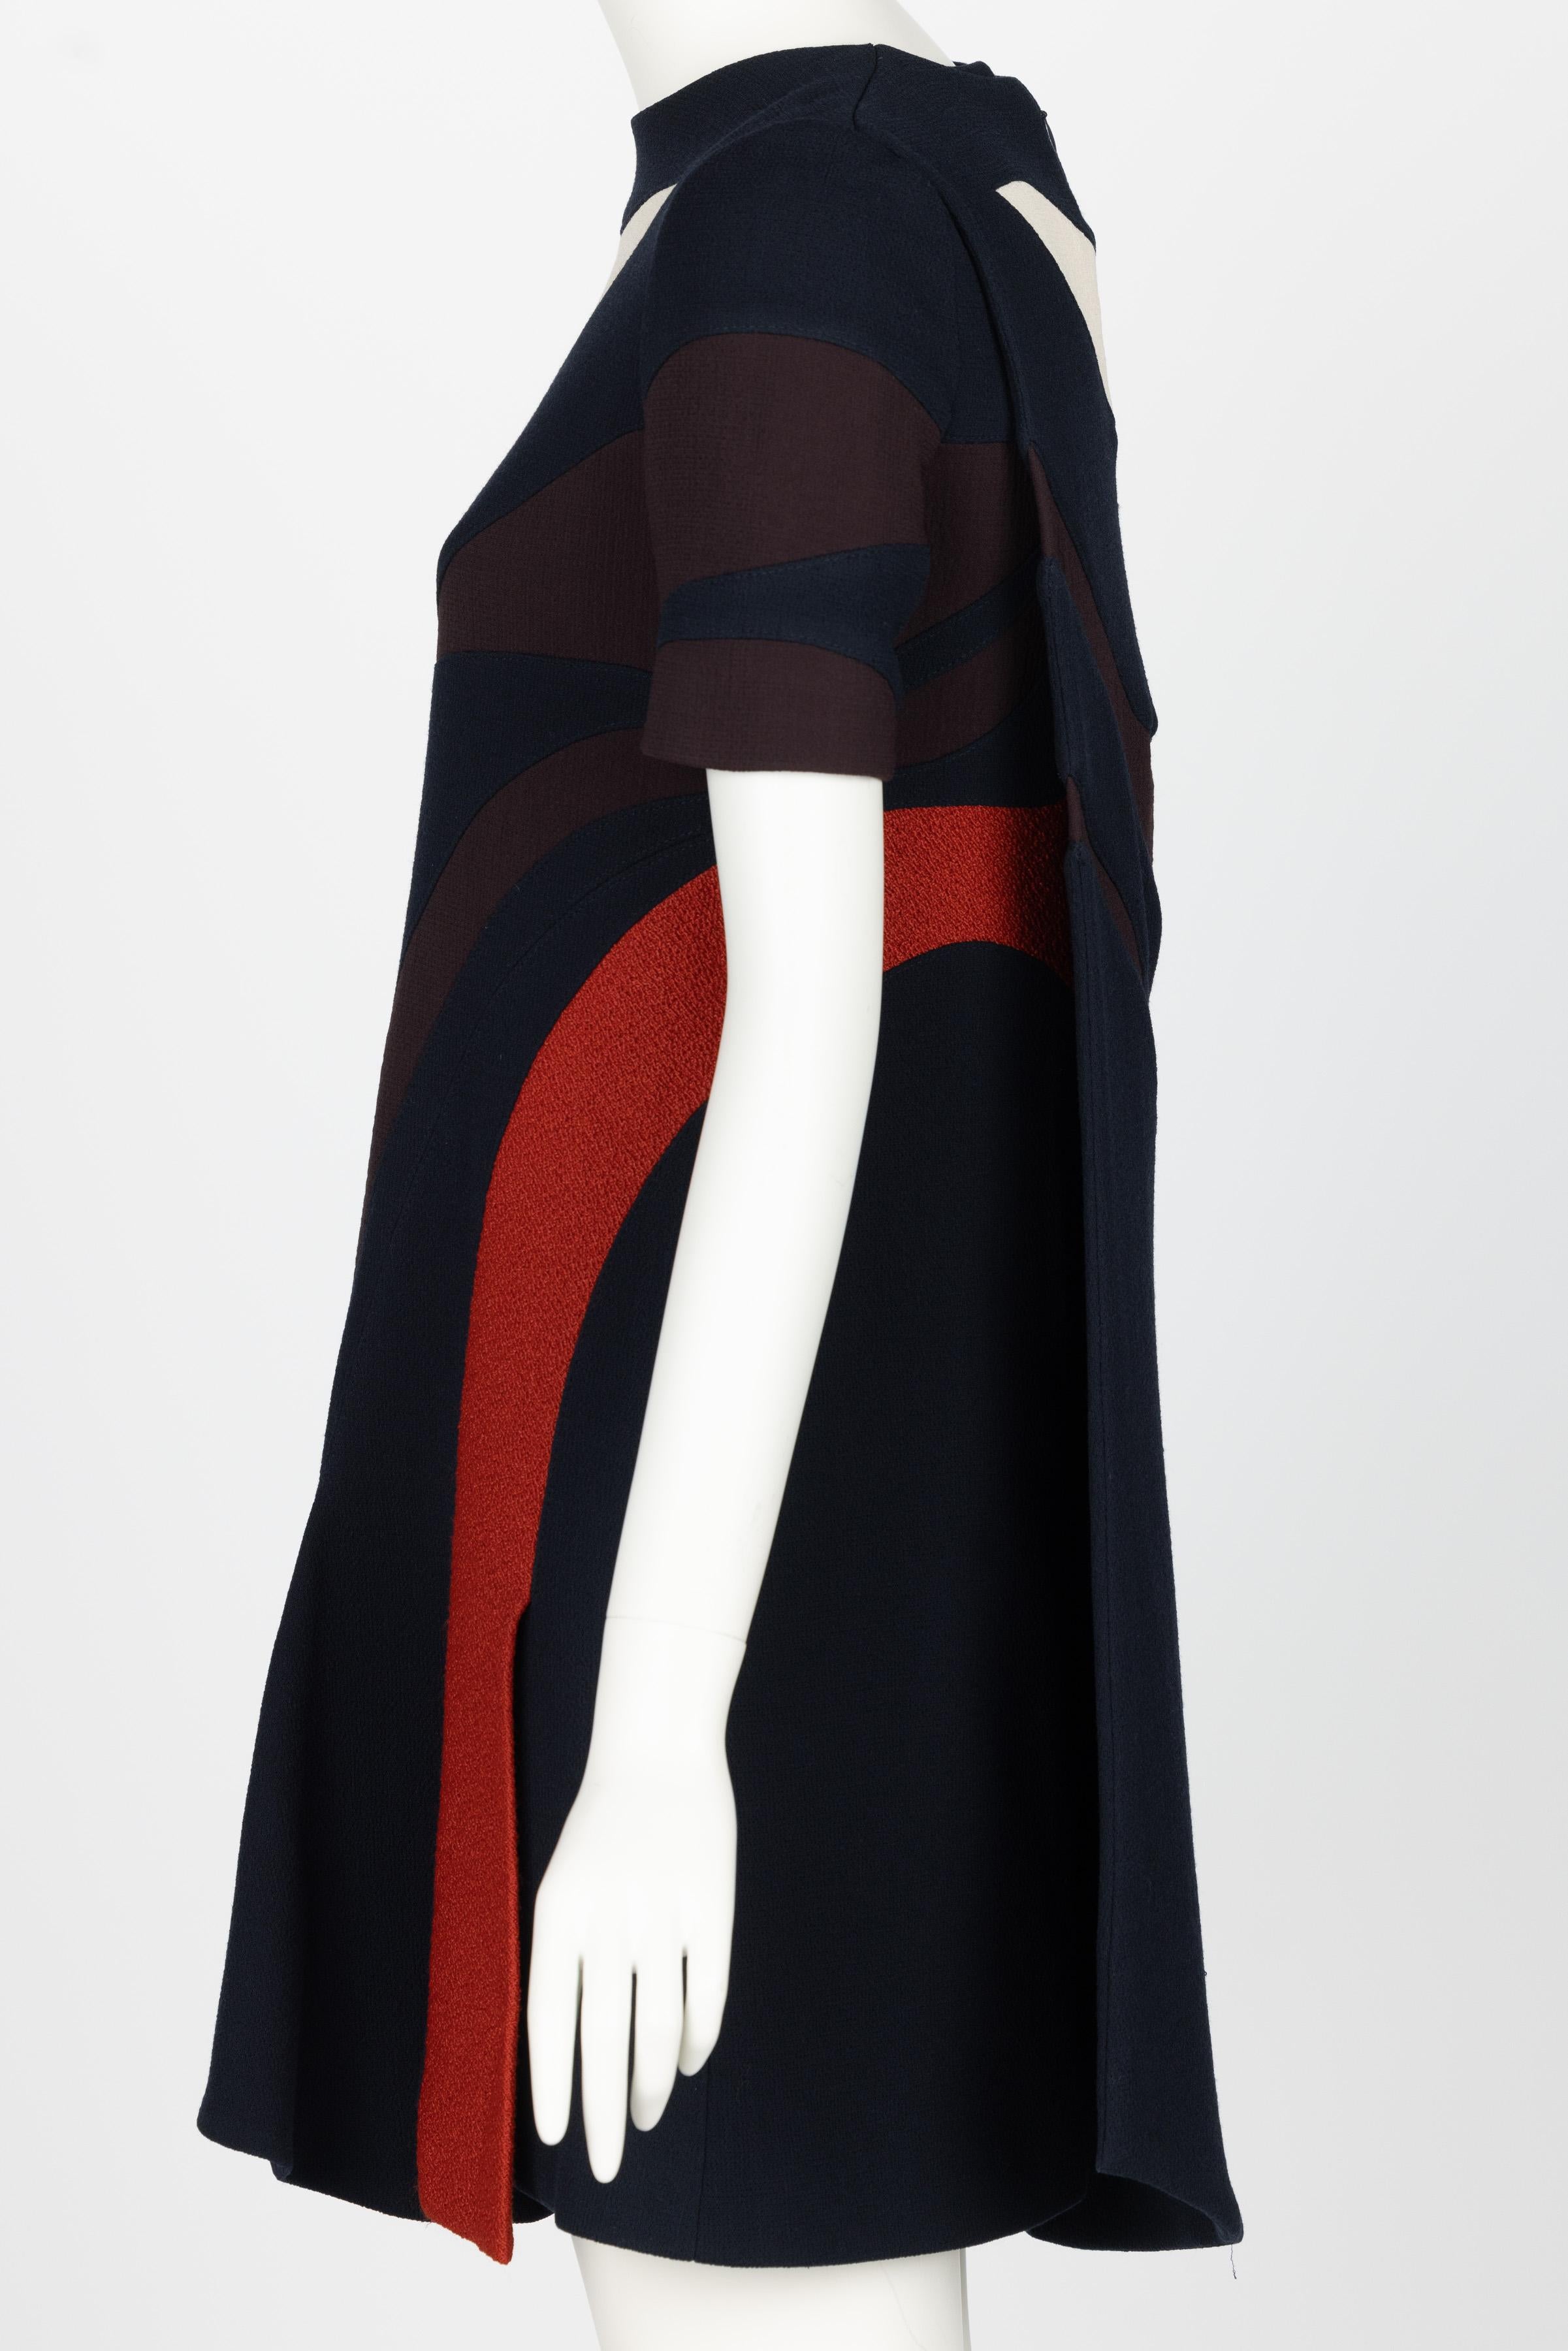 Christian Dior Raf Simmons Abstract Stripe Dress Runway Fall 2015  1